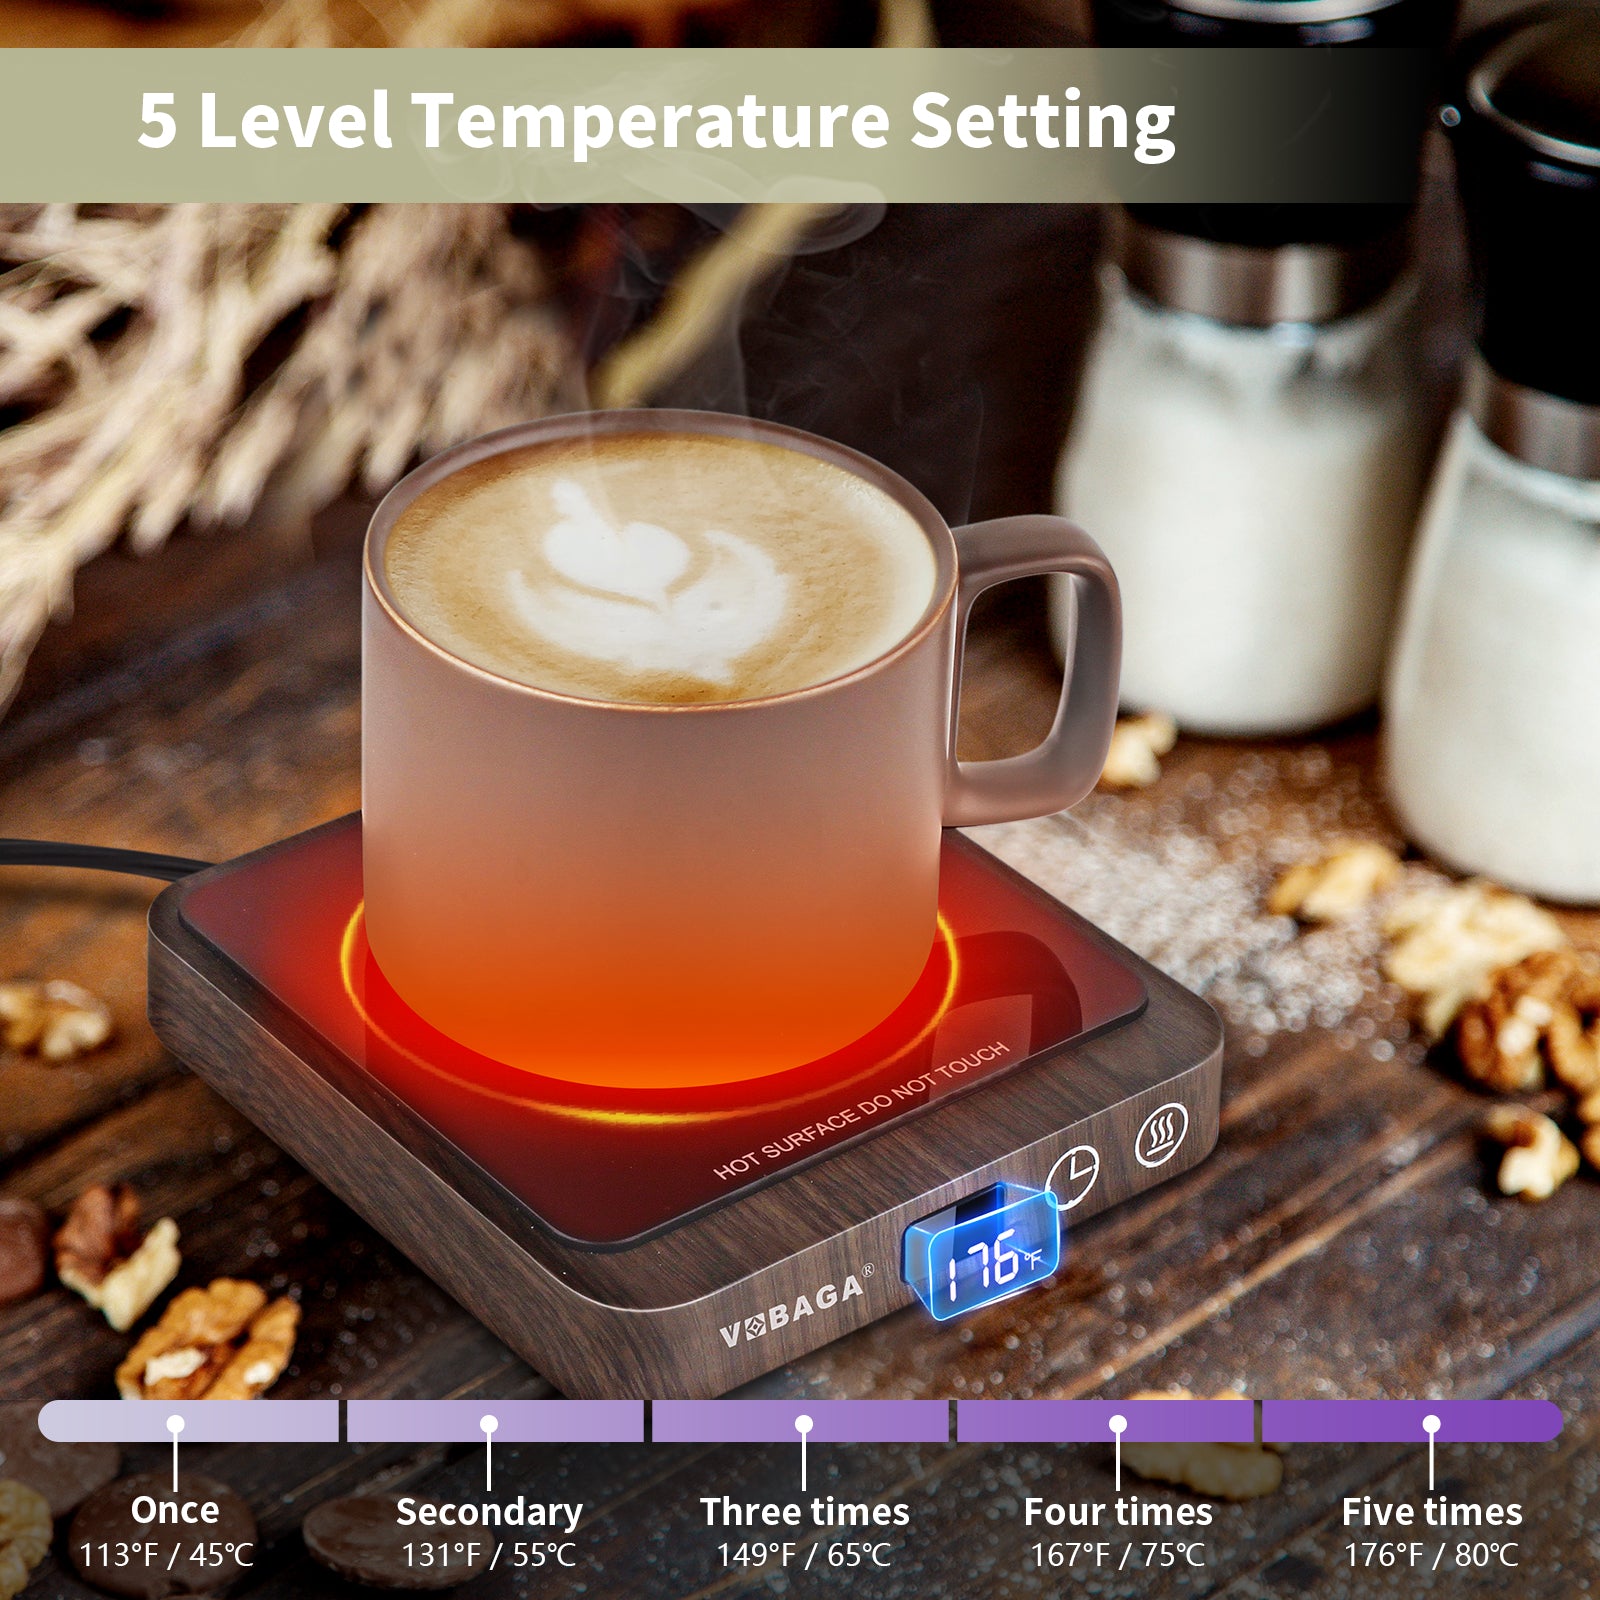 VOBAGA Coffee Mug Warmer & Electric Beverage Warmer with 5 Temperature Settings, Coffee Warmer with Digital Display Auto Shut Off (No Cup)